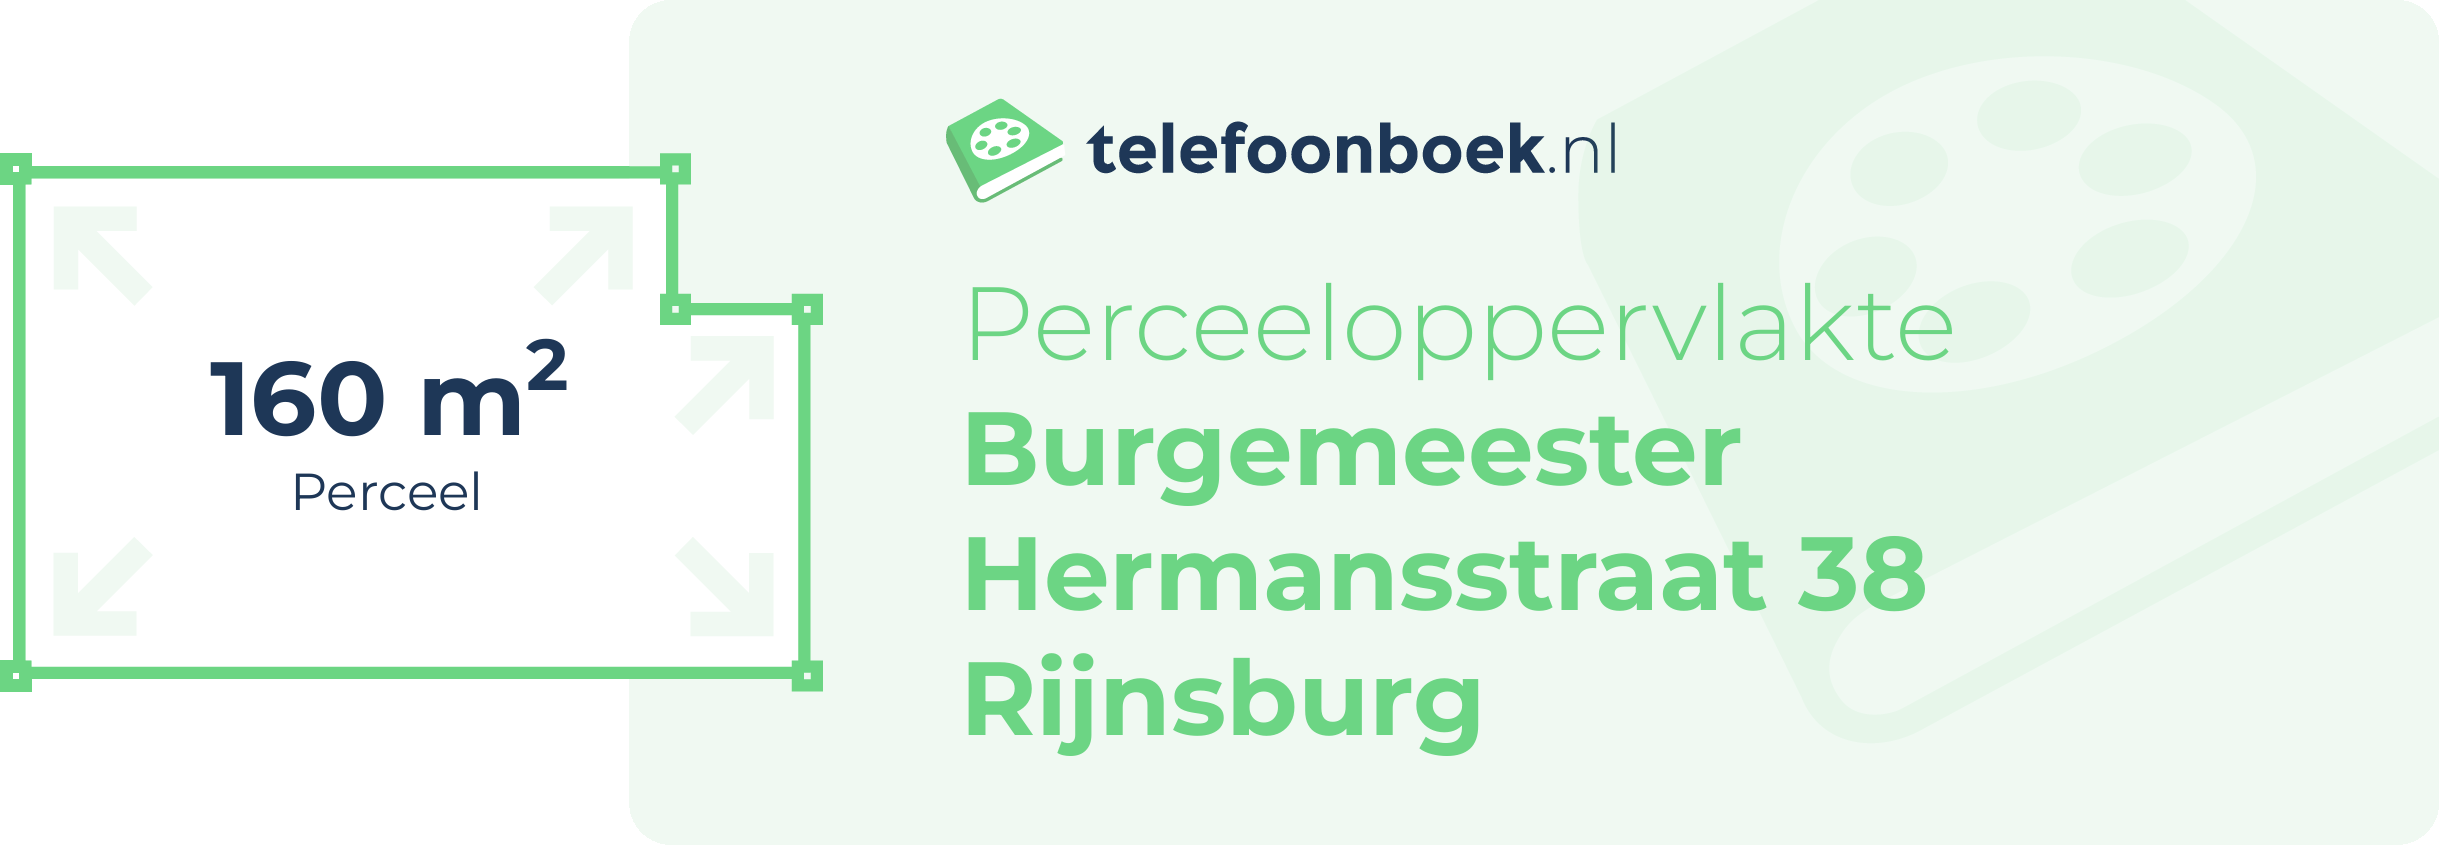 Perceeloppervlakte Burgemeester Hermansstraat 38 Rijnsburg